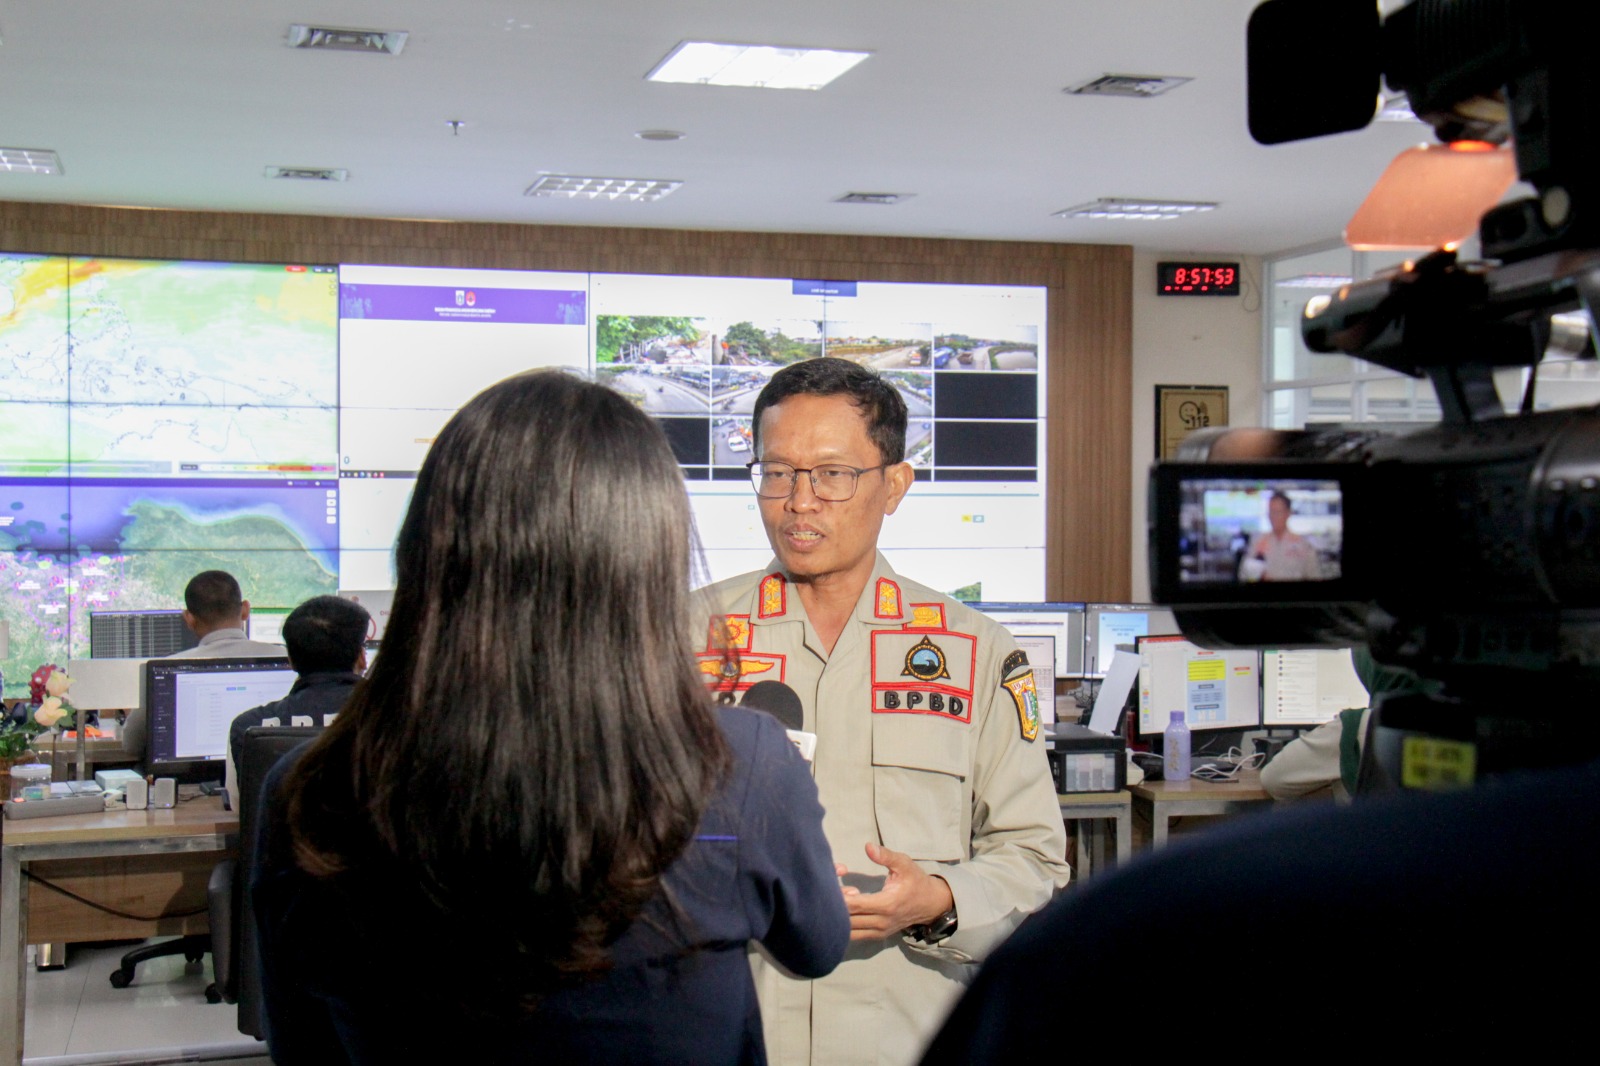 Wawancara dengan I News di Kantor BPBD DKI Jakarta